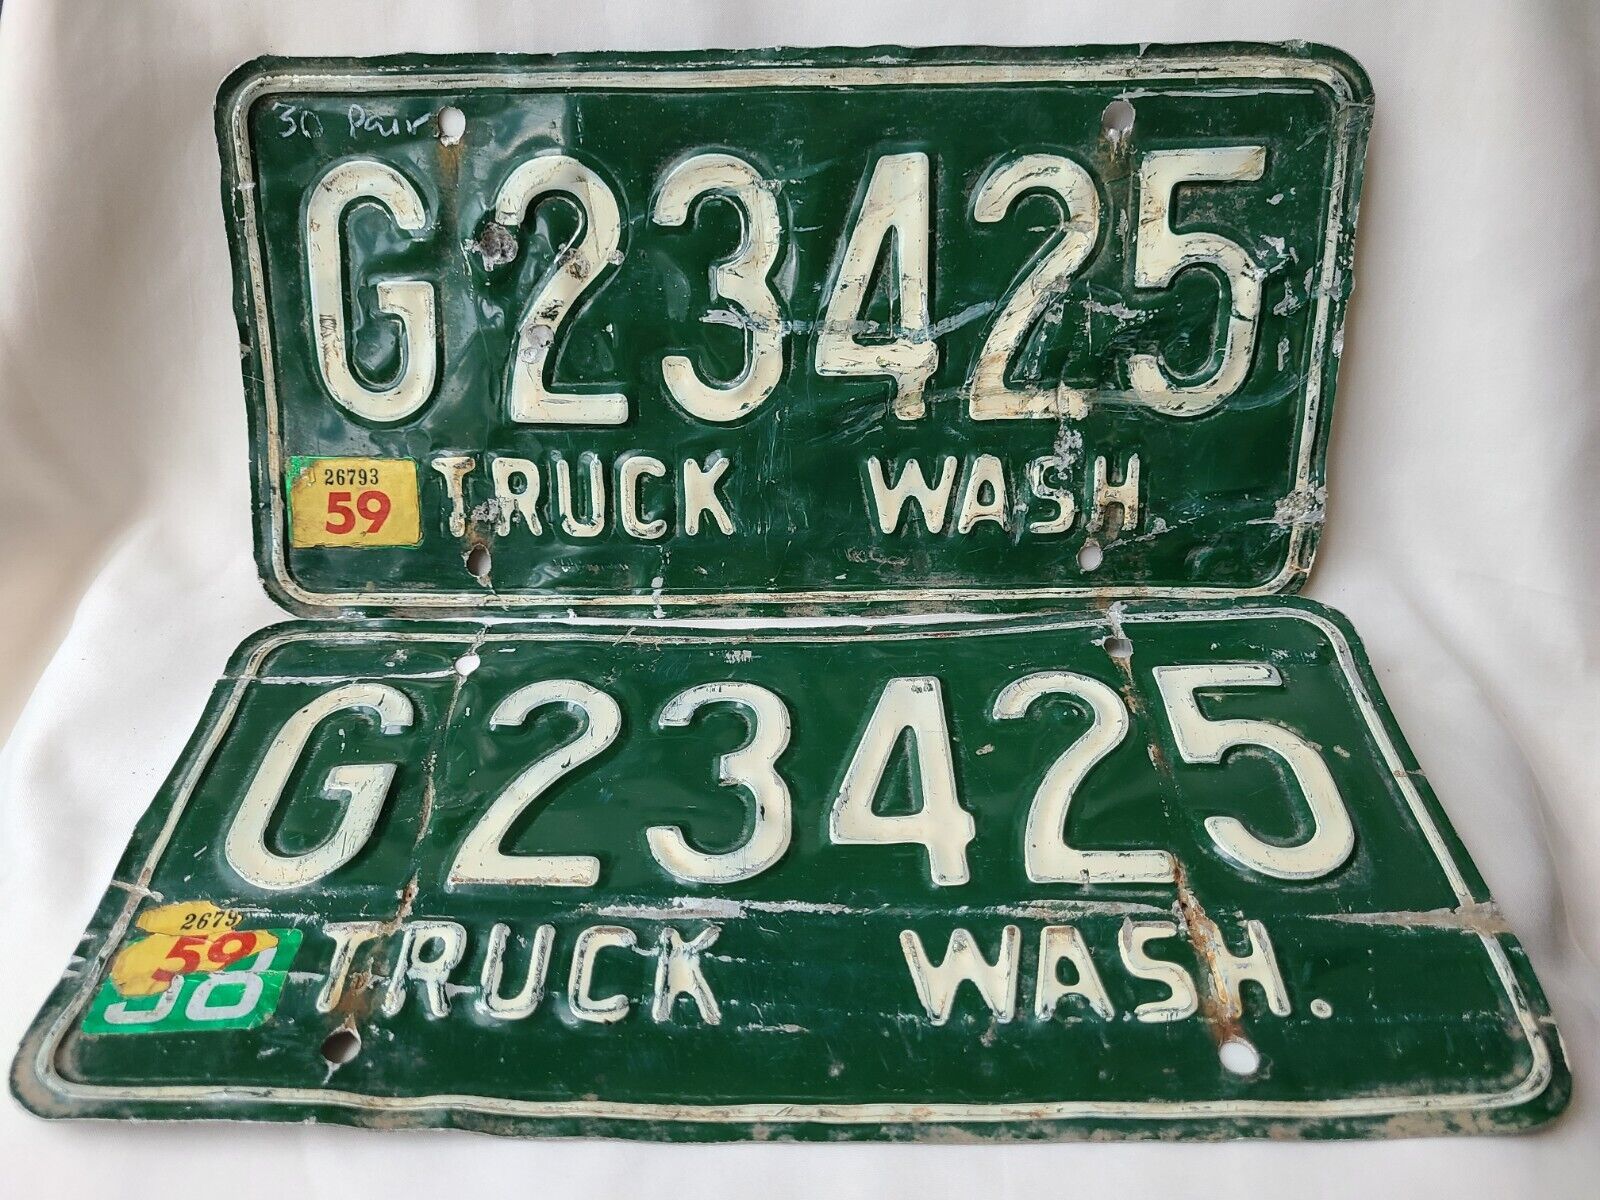 Vintage 1959 Washington Truck License Plate Pair 8223